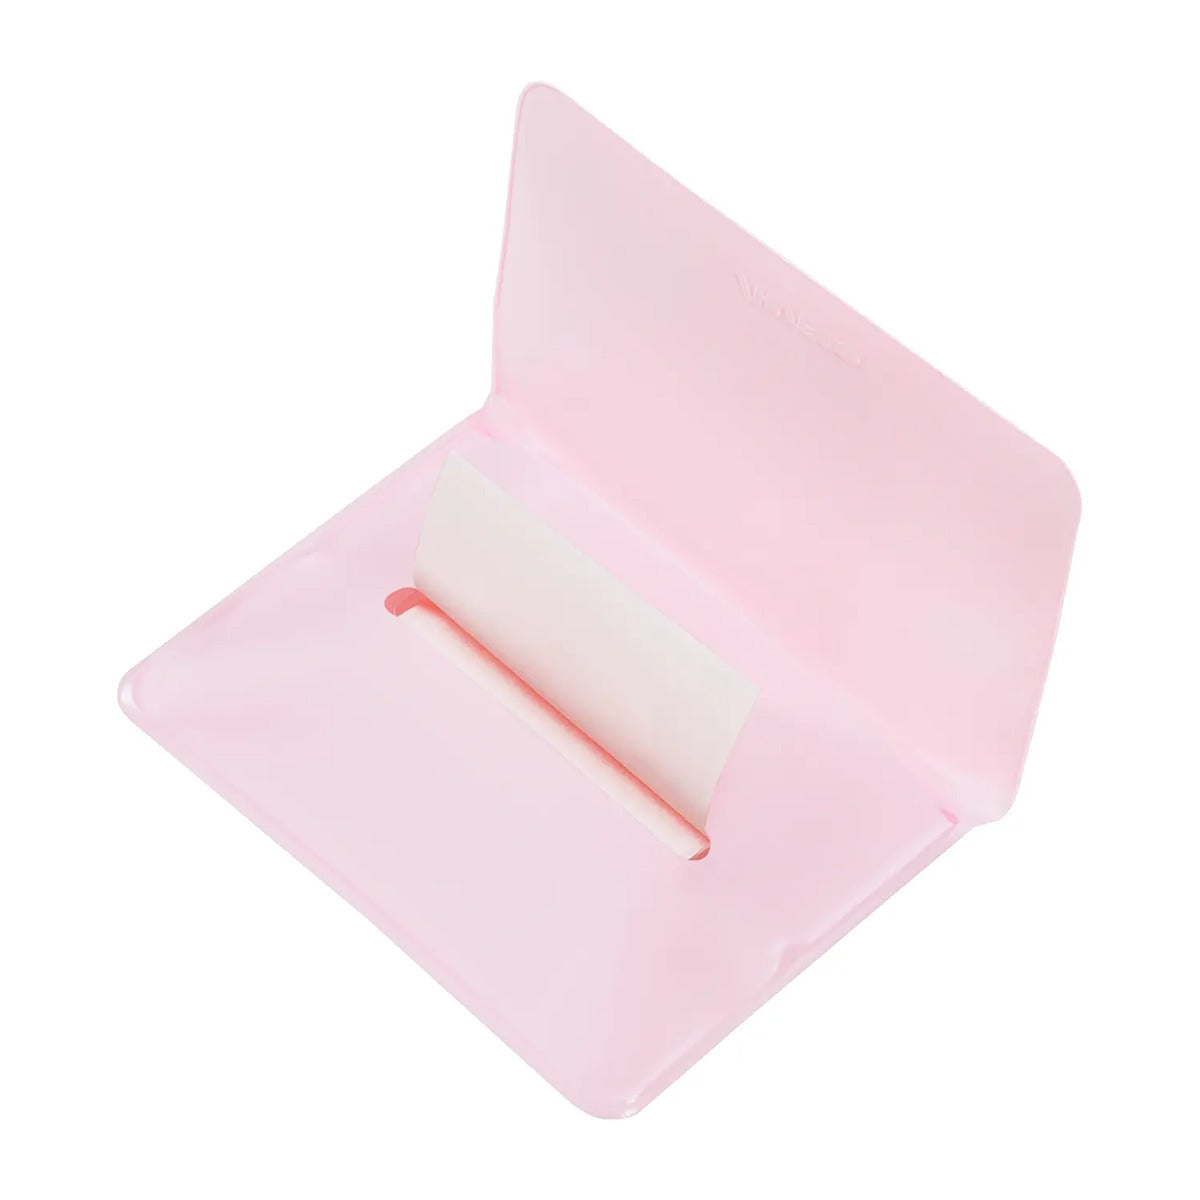 Shiseido Paper Oil Powder Pull Pop 002 Pink